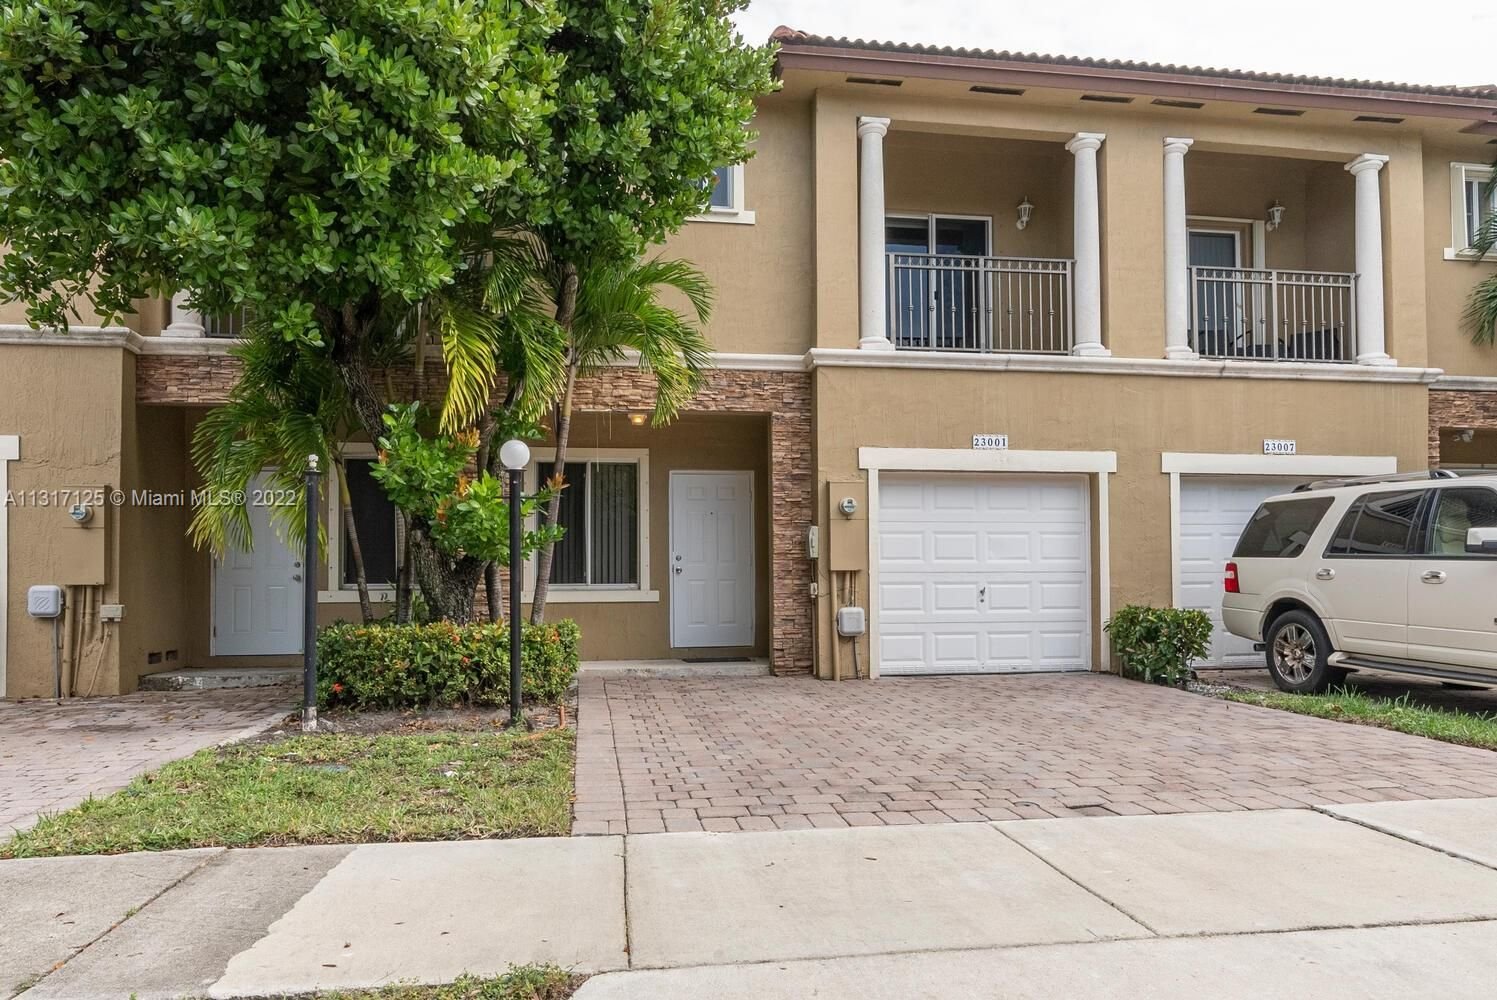 Real estate property located at 23001 112th Ct #0, Miami-Dade County, Miami, FL